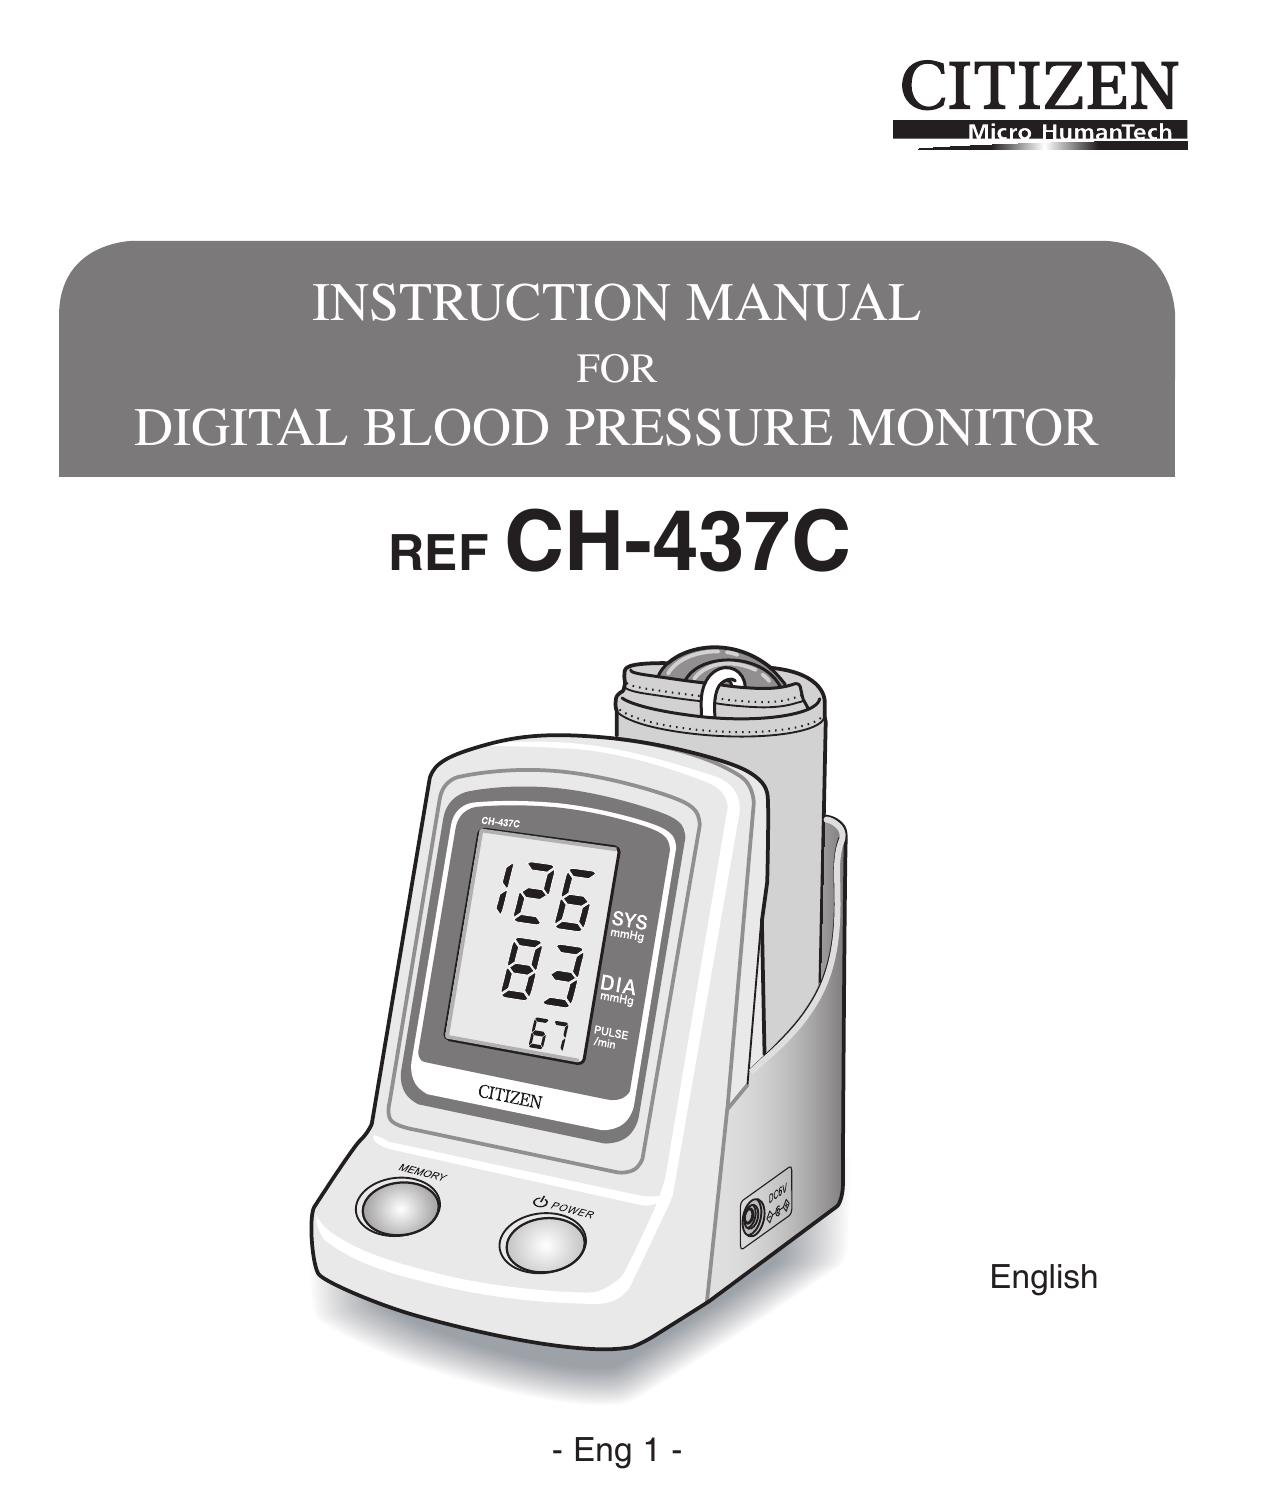 Citizen CH-437C Blood Pressure Monitor User Manual